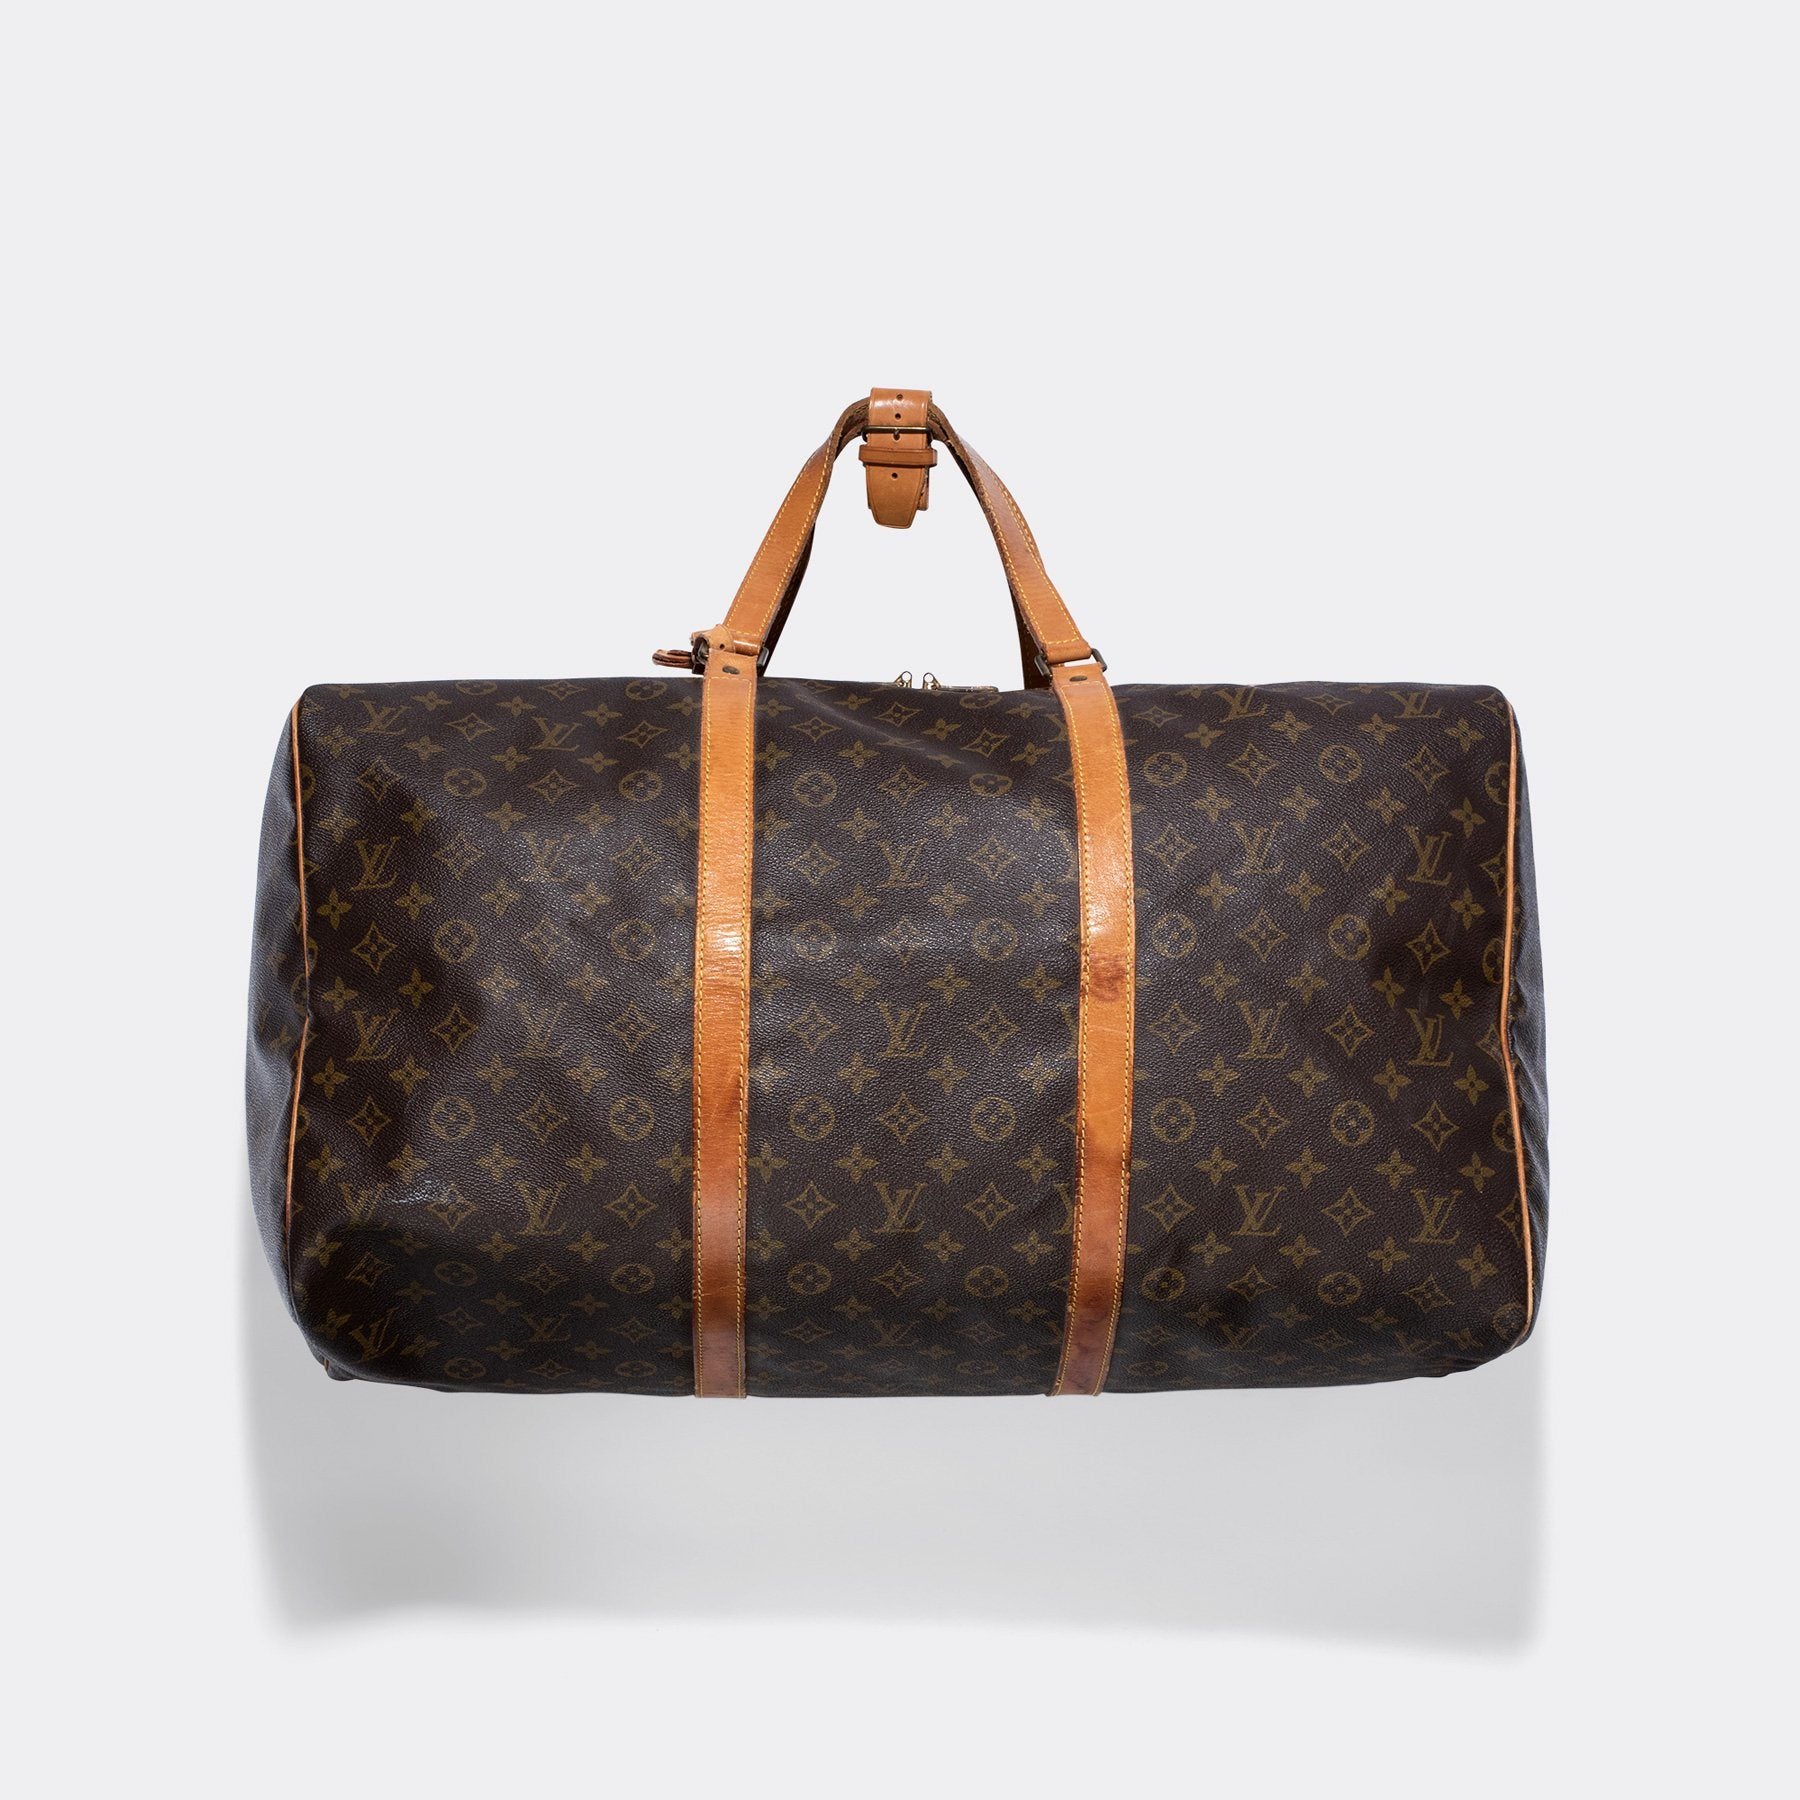 Louis Vuitton Monogram Sac Souple 55 Duffle Bag